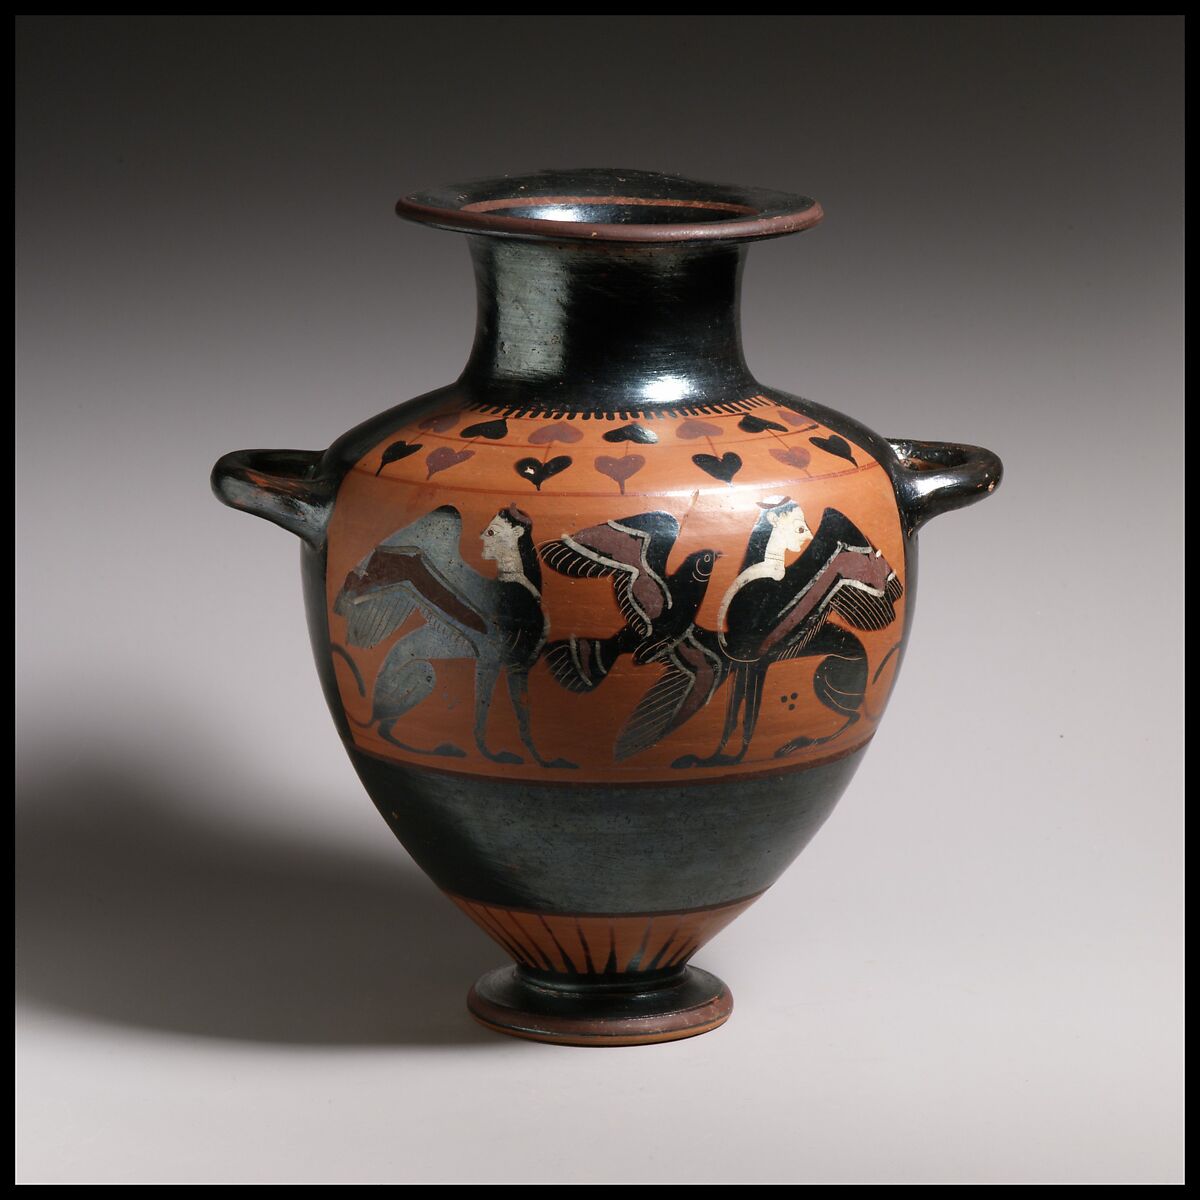 Terracotta hydria (water jar), Terracotta, Greek, Euboean